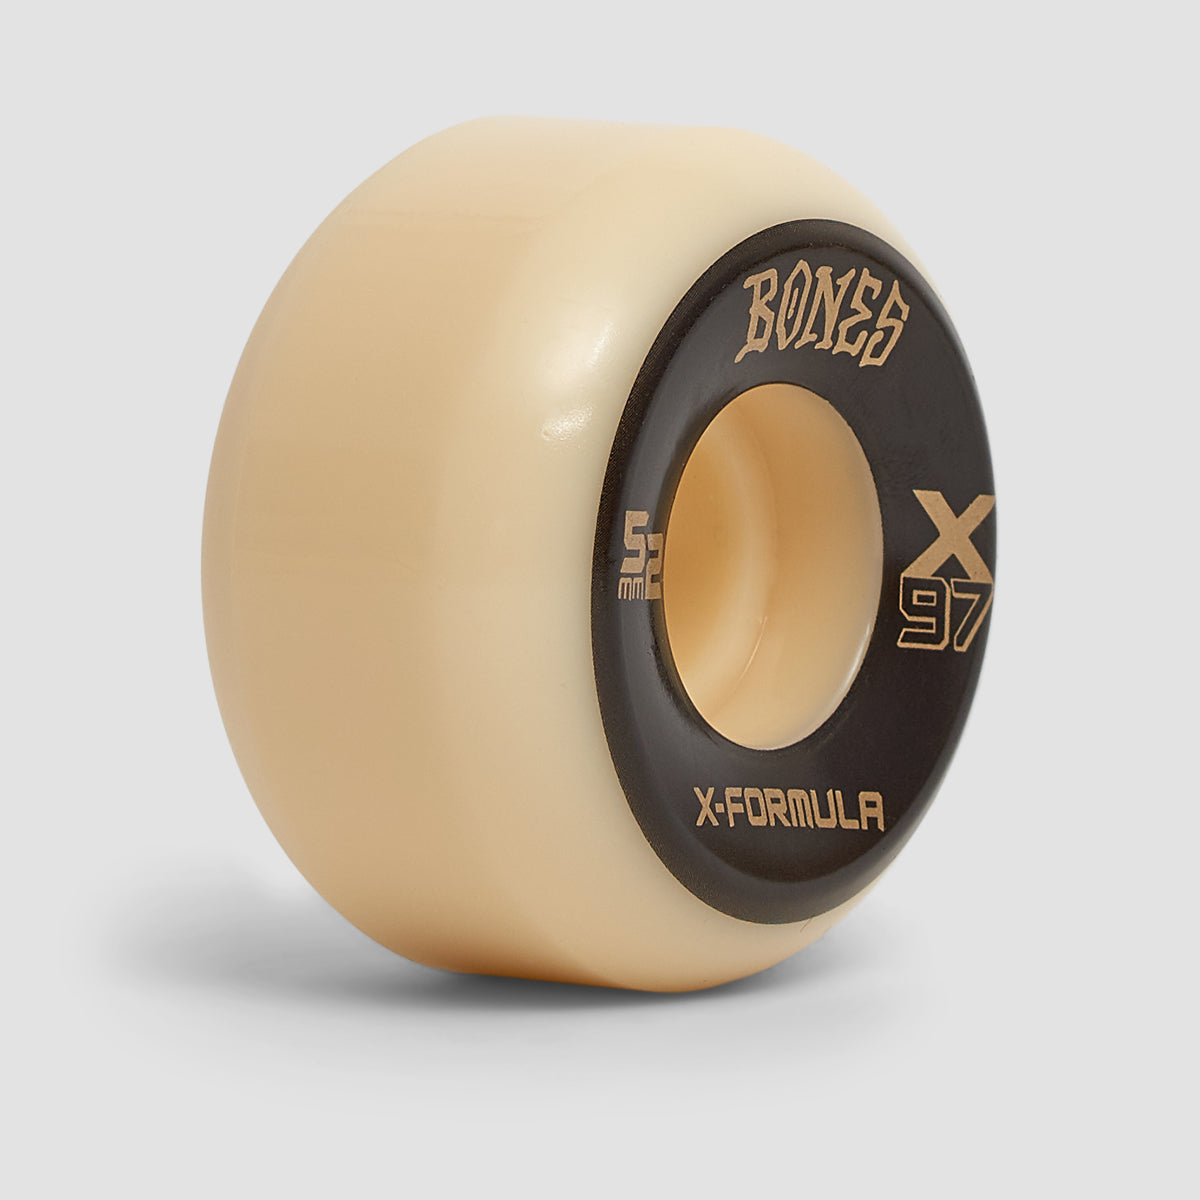 Bones X-Formula V5 Sidecut X97A Skateboard Wheels Natural 52mm